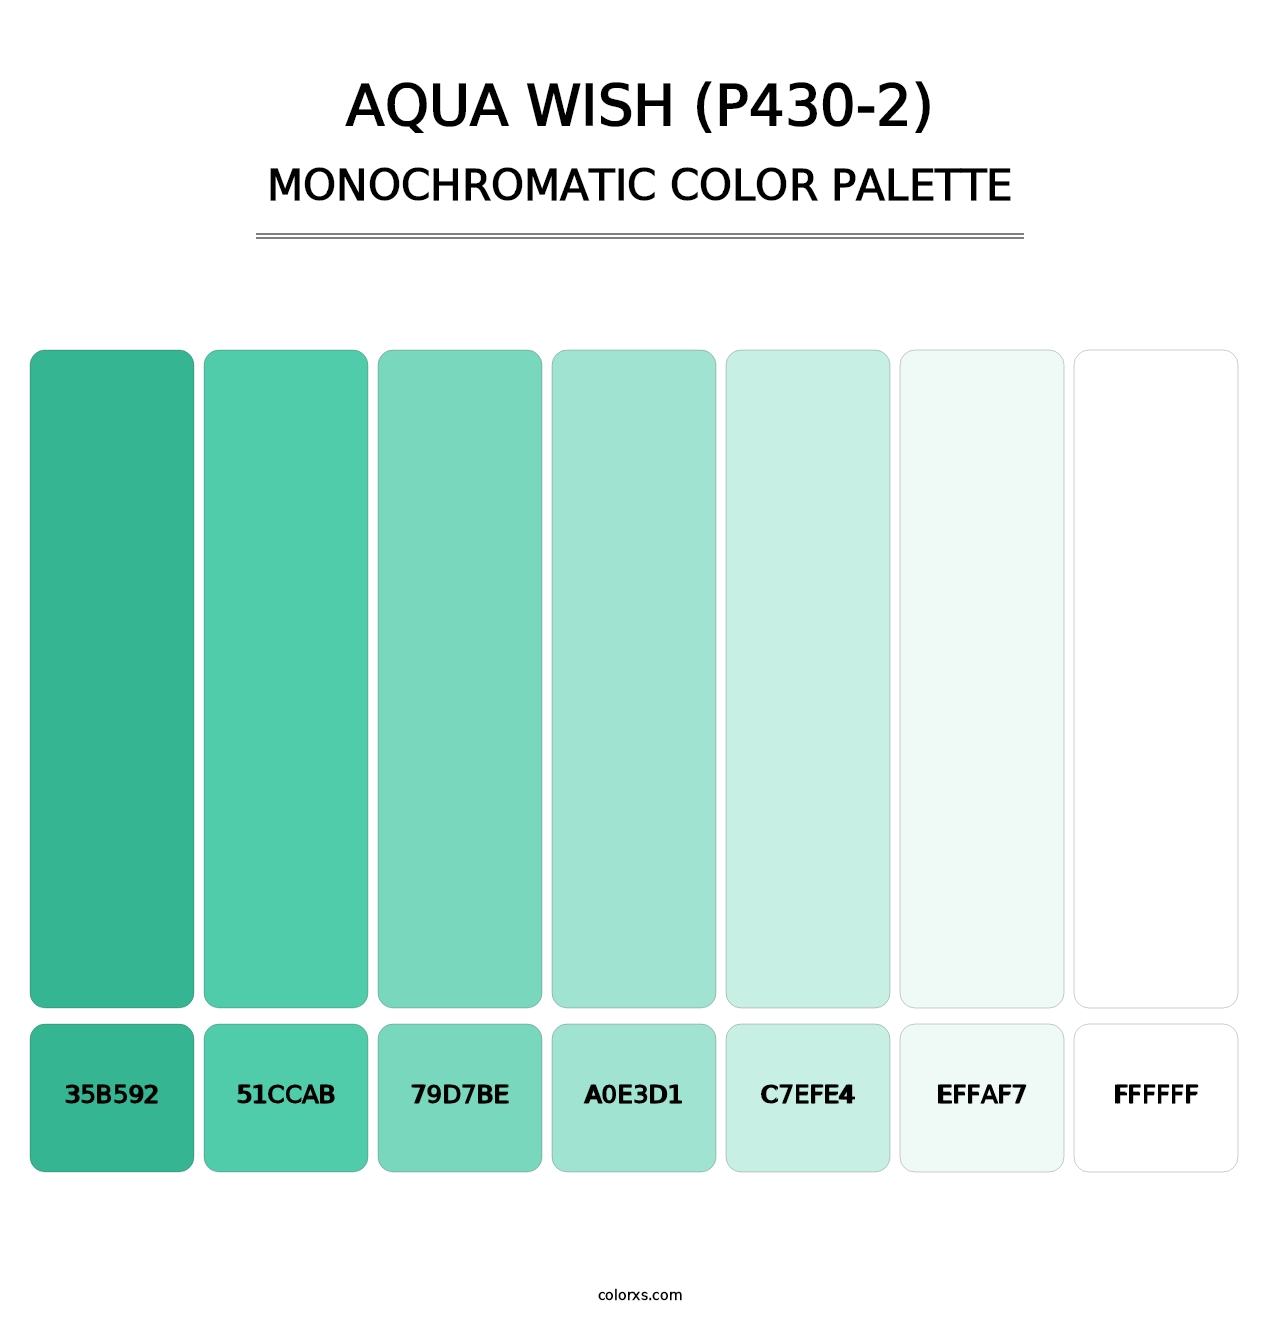 Aqua Wish (P430-2) - Monochromatic Color Palette